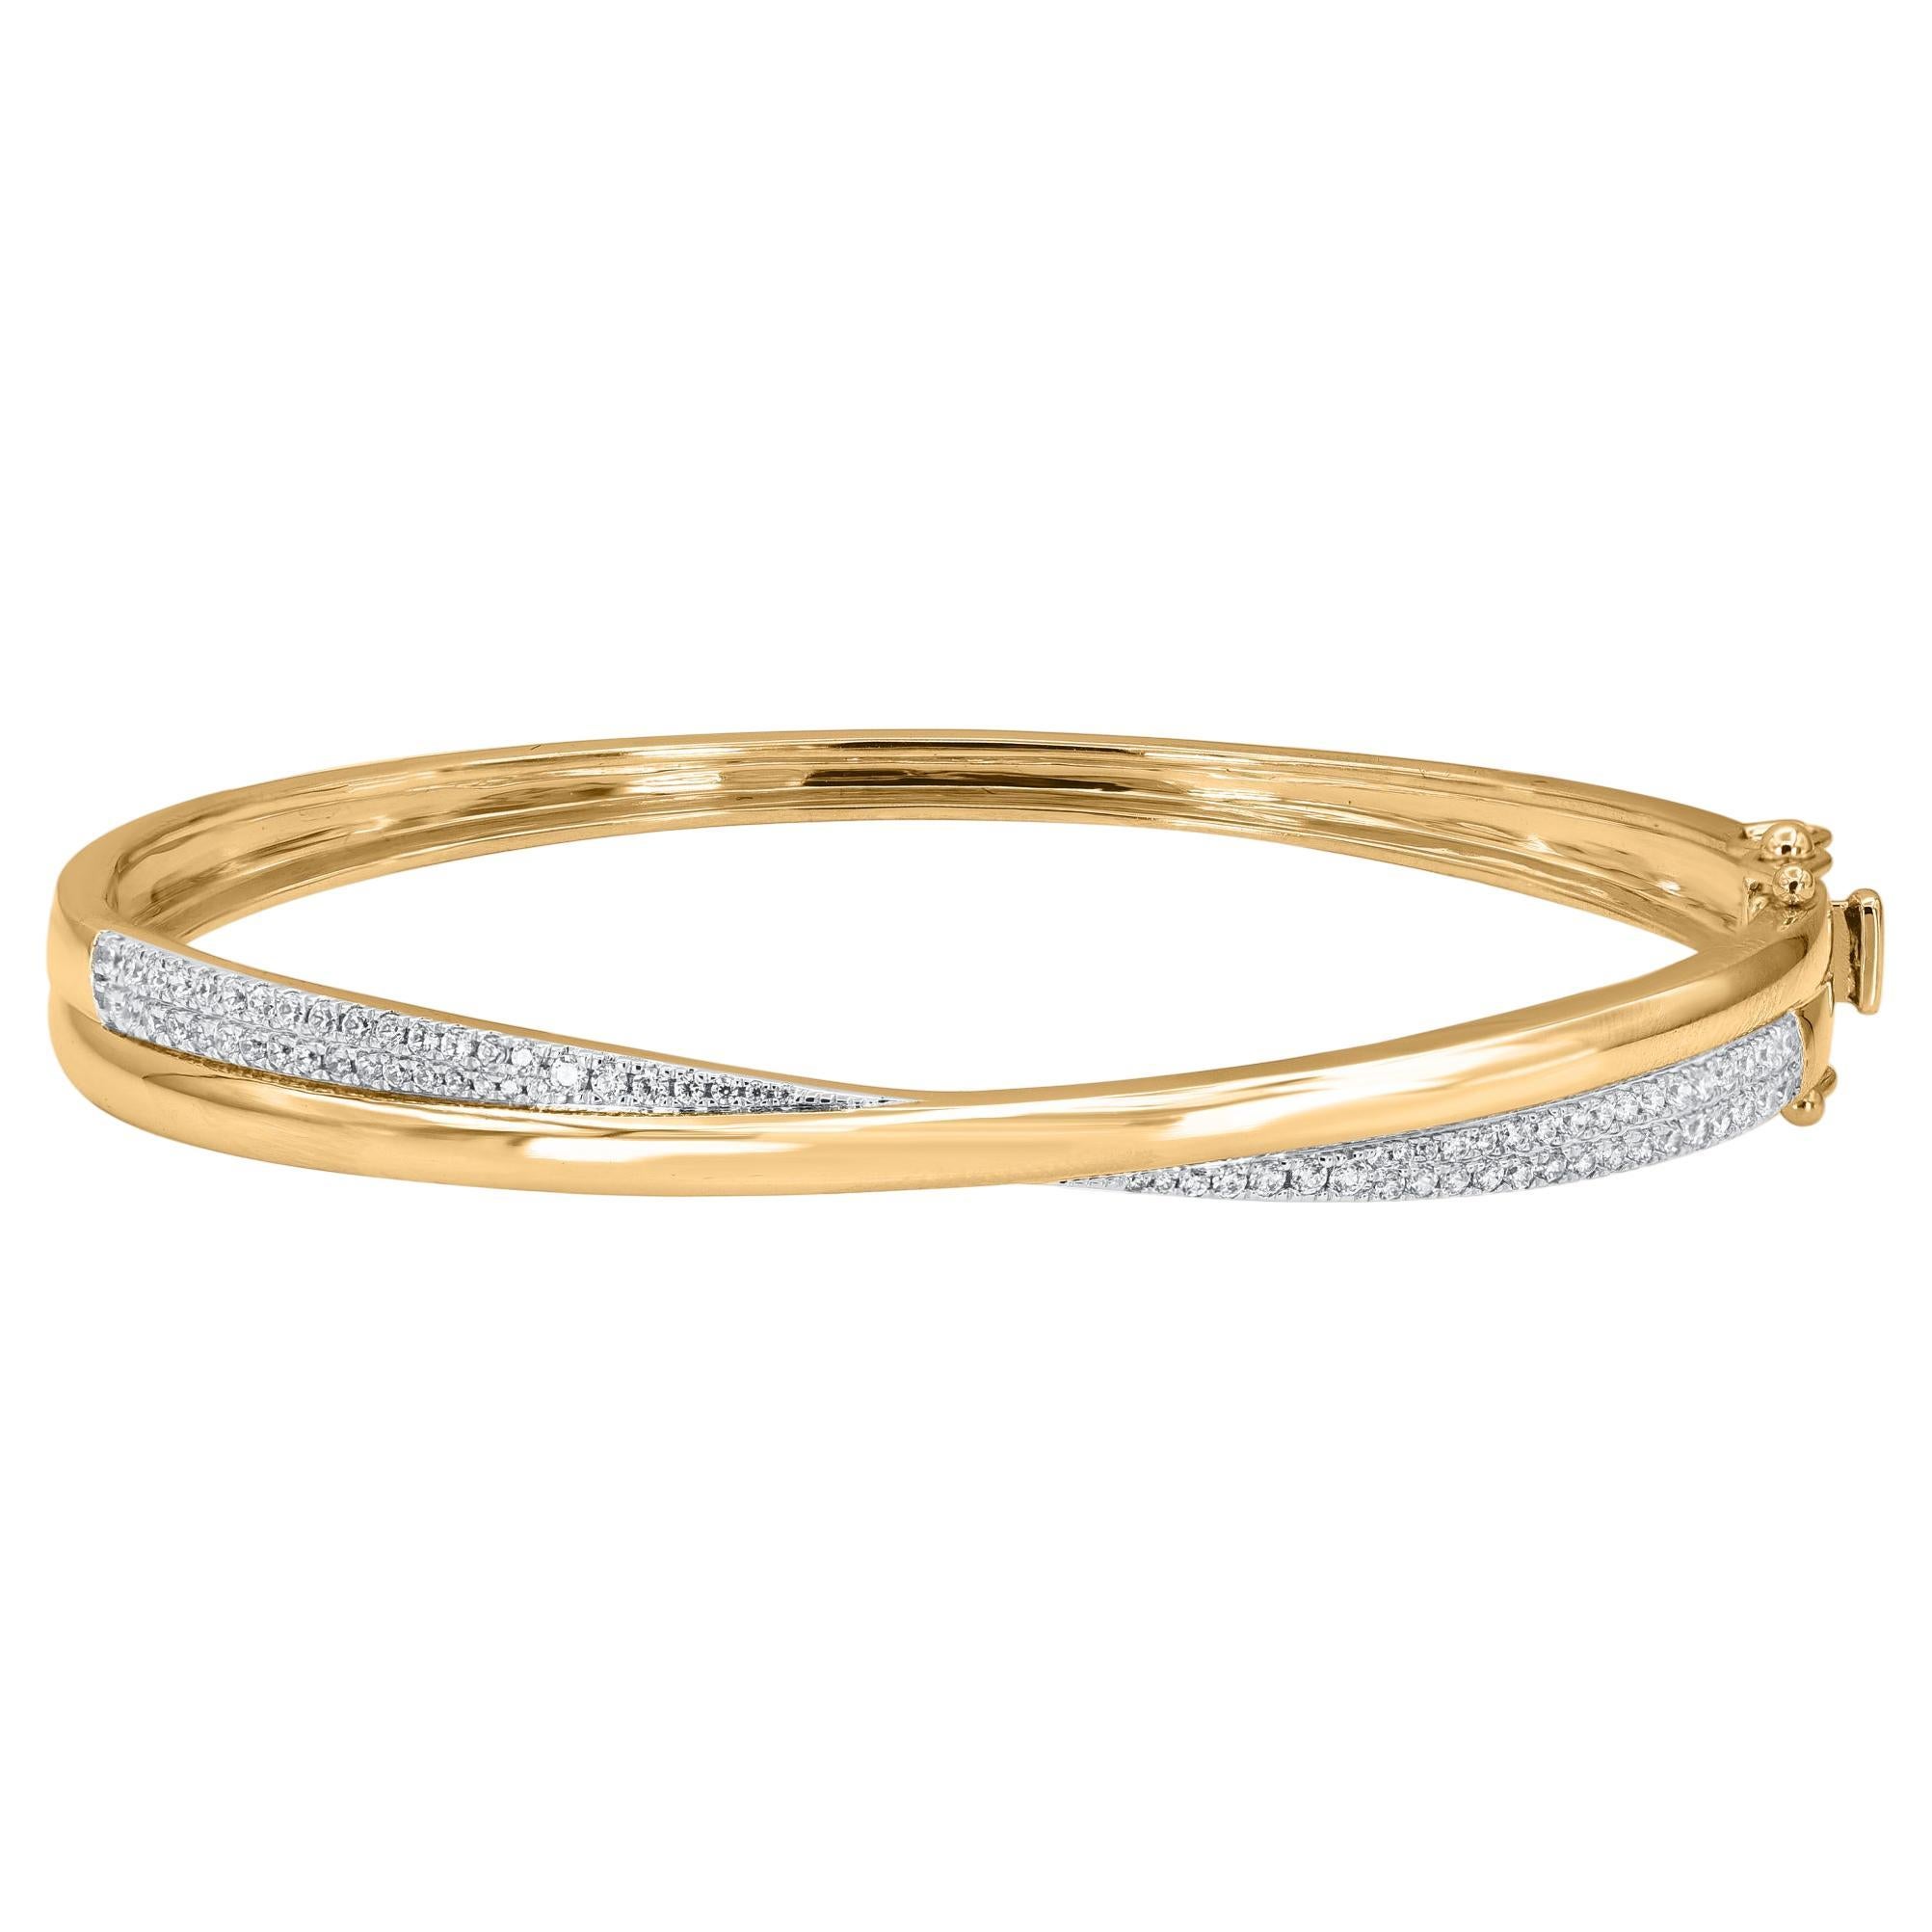 TJD 1/2 Carat Round Cut Diamond Criss Cross Bangle Bracelet in 18KT Yellow Gold